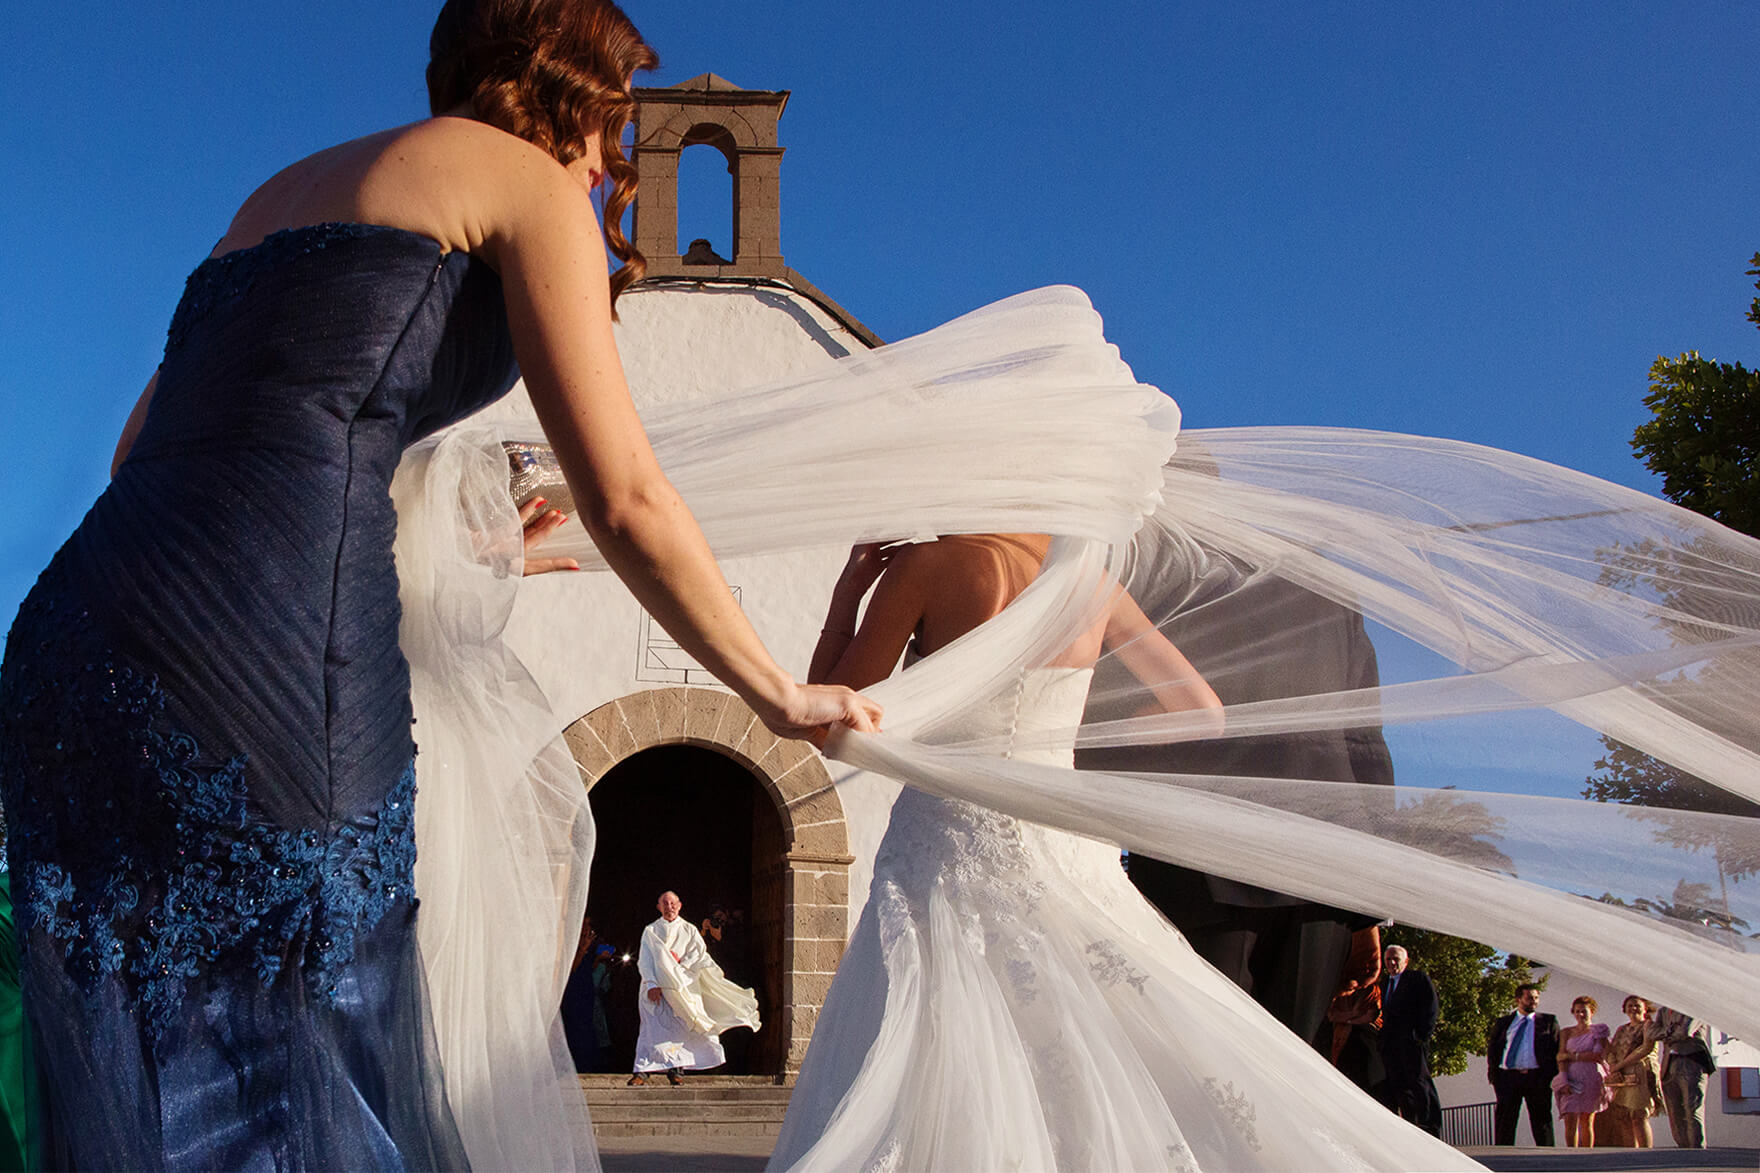 2 of the best stories weddings 2015 Pedro Cabrera & Andrea Giraldo 